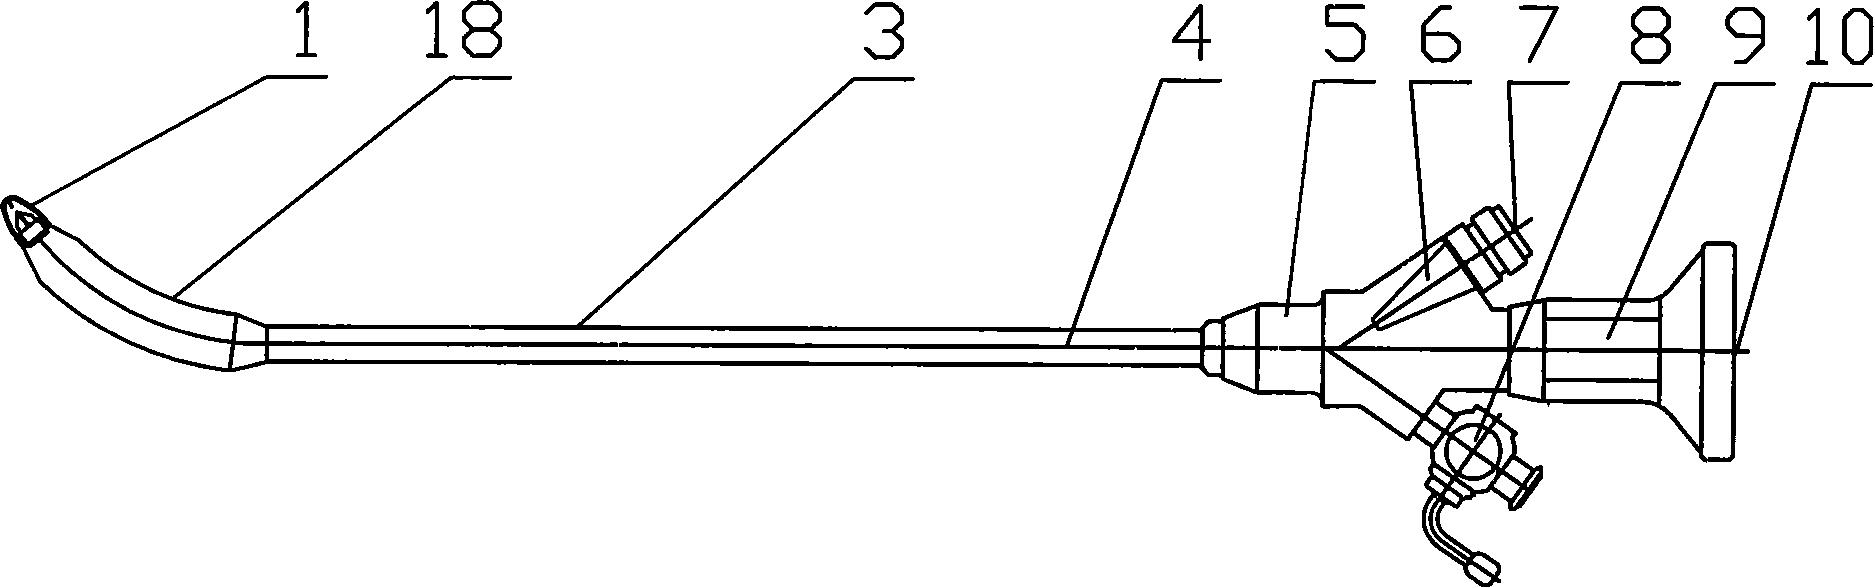 Diameter variable male urethra dilator with endoscope